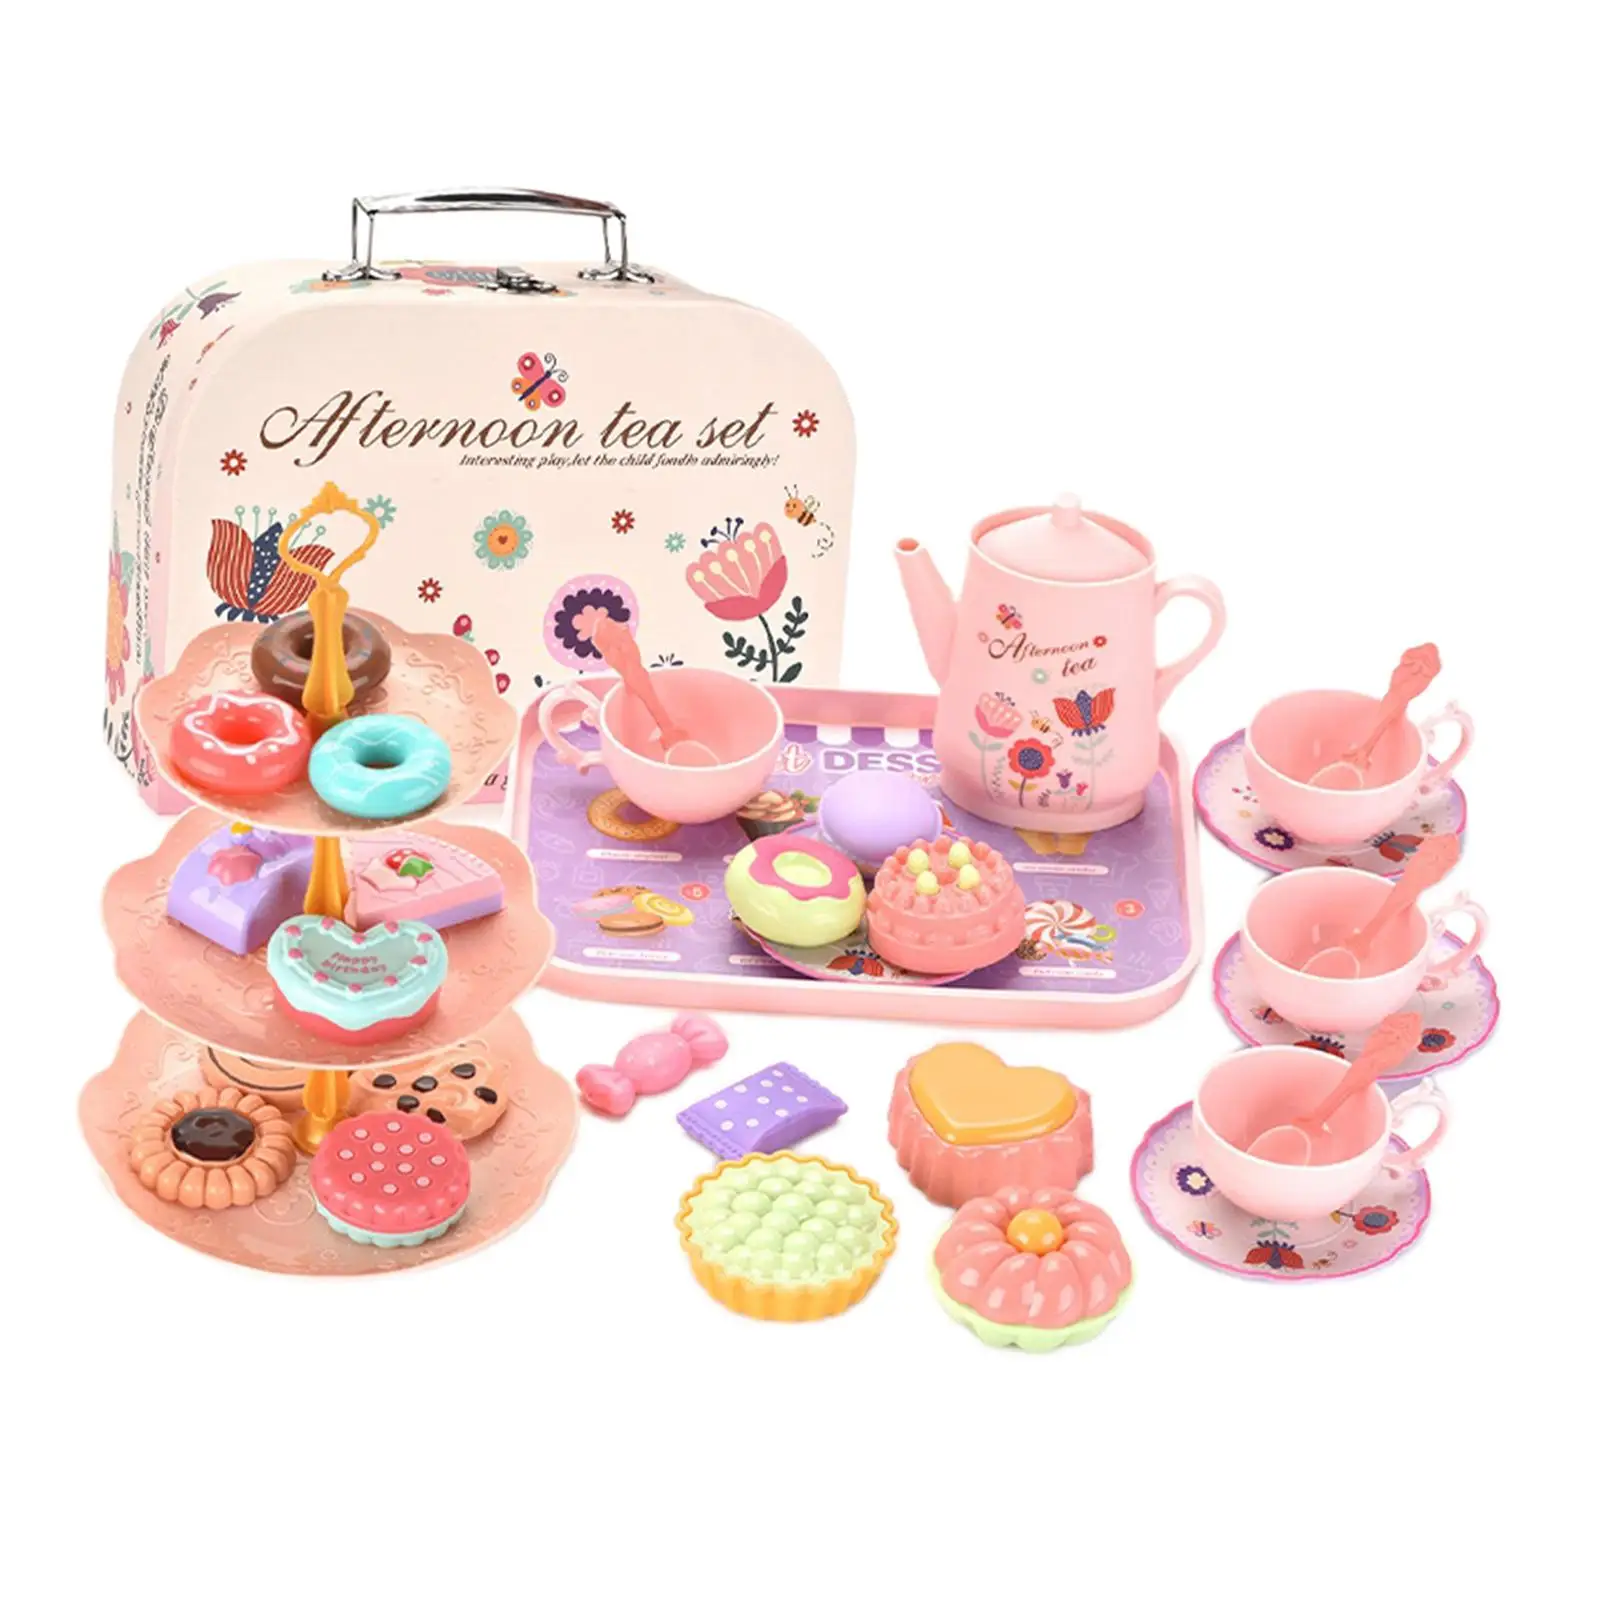 Simulation Tea Cake Set Montessori Toy Girls Toys DIY Pretend Role play Early